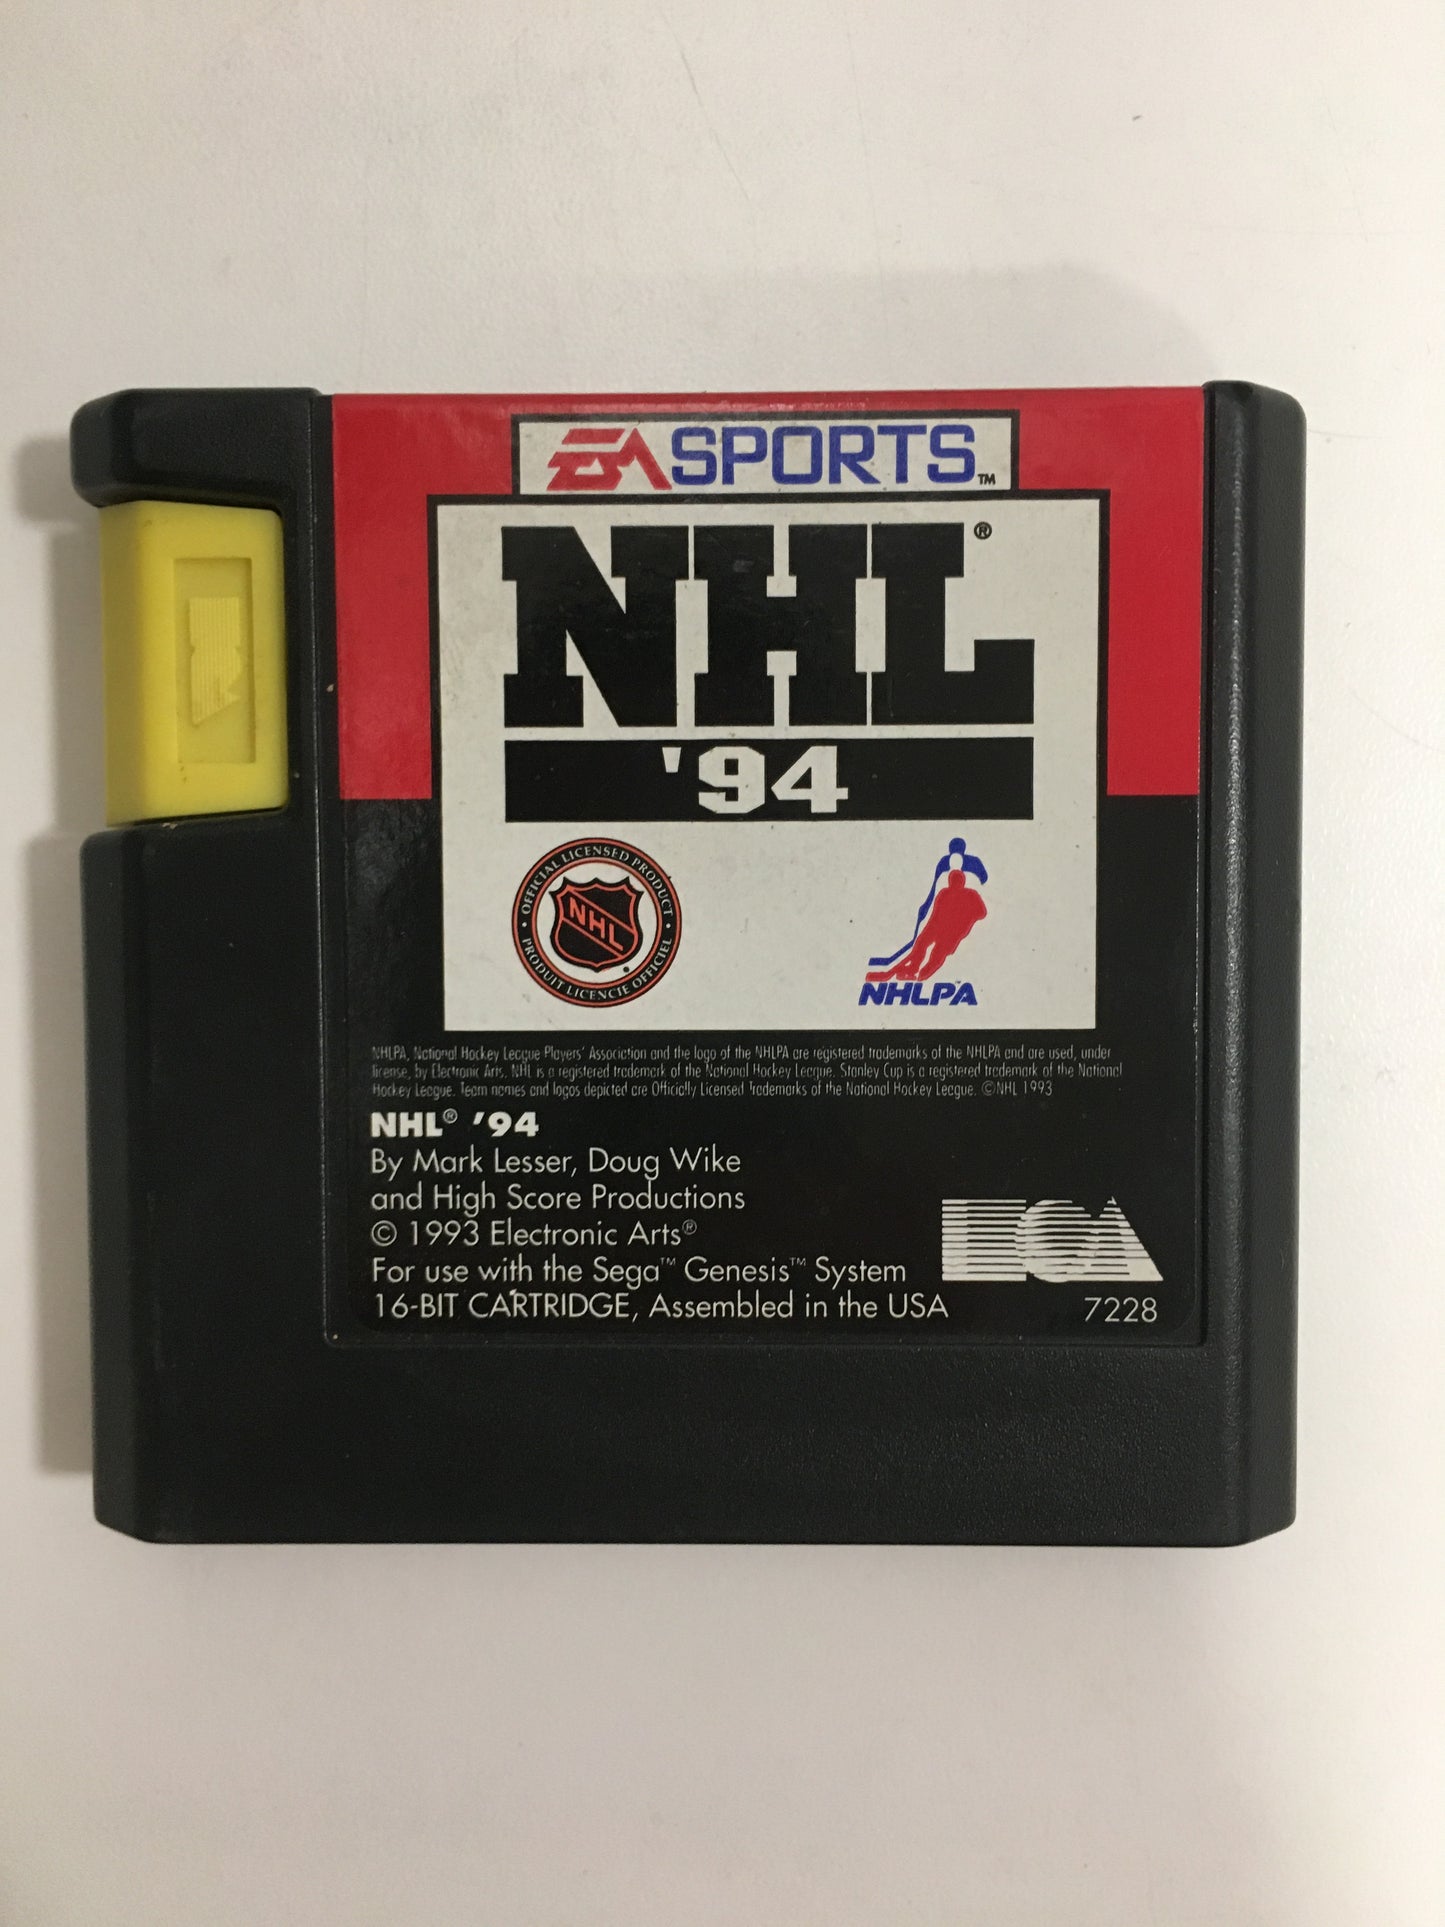 NHL hockey 94 sega megadrive avec notice